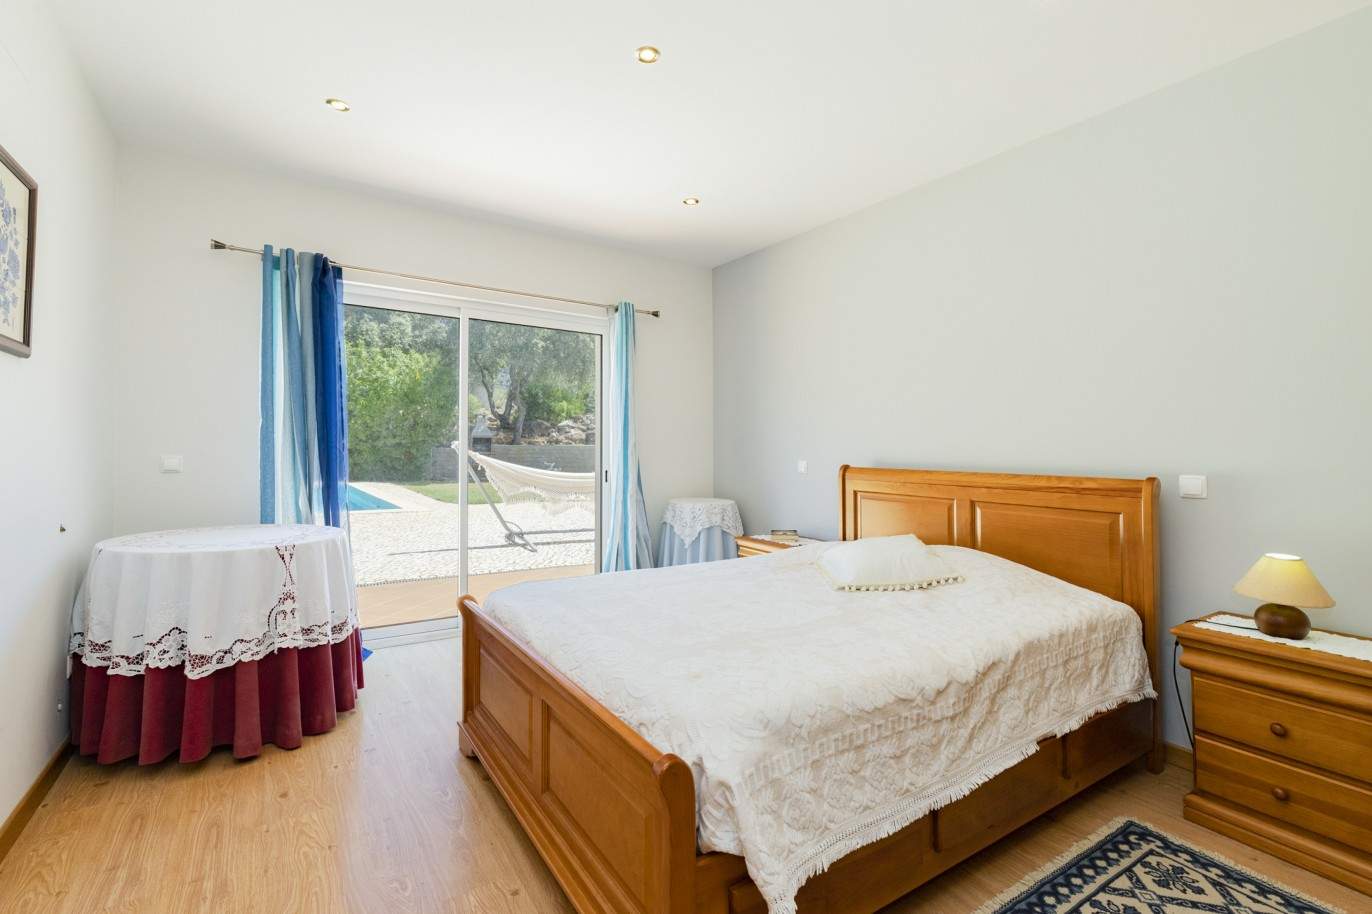 4 Bedroom Villa with pool, for sale in Loulé, Algarve_201295